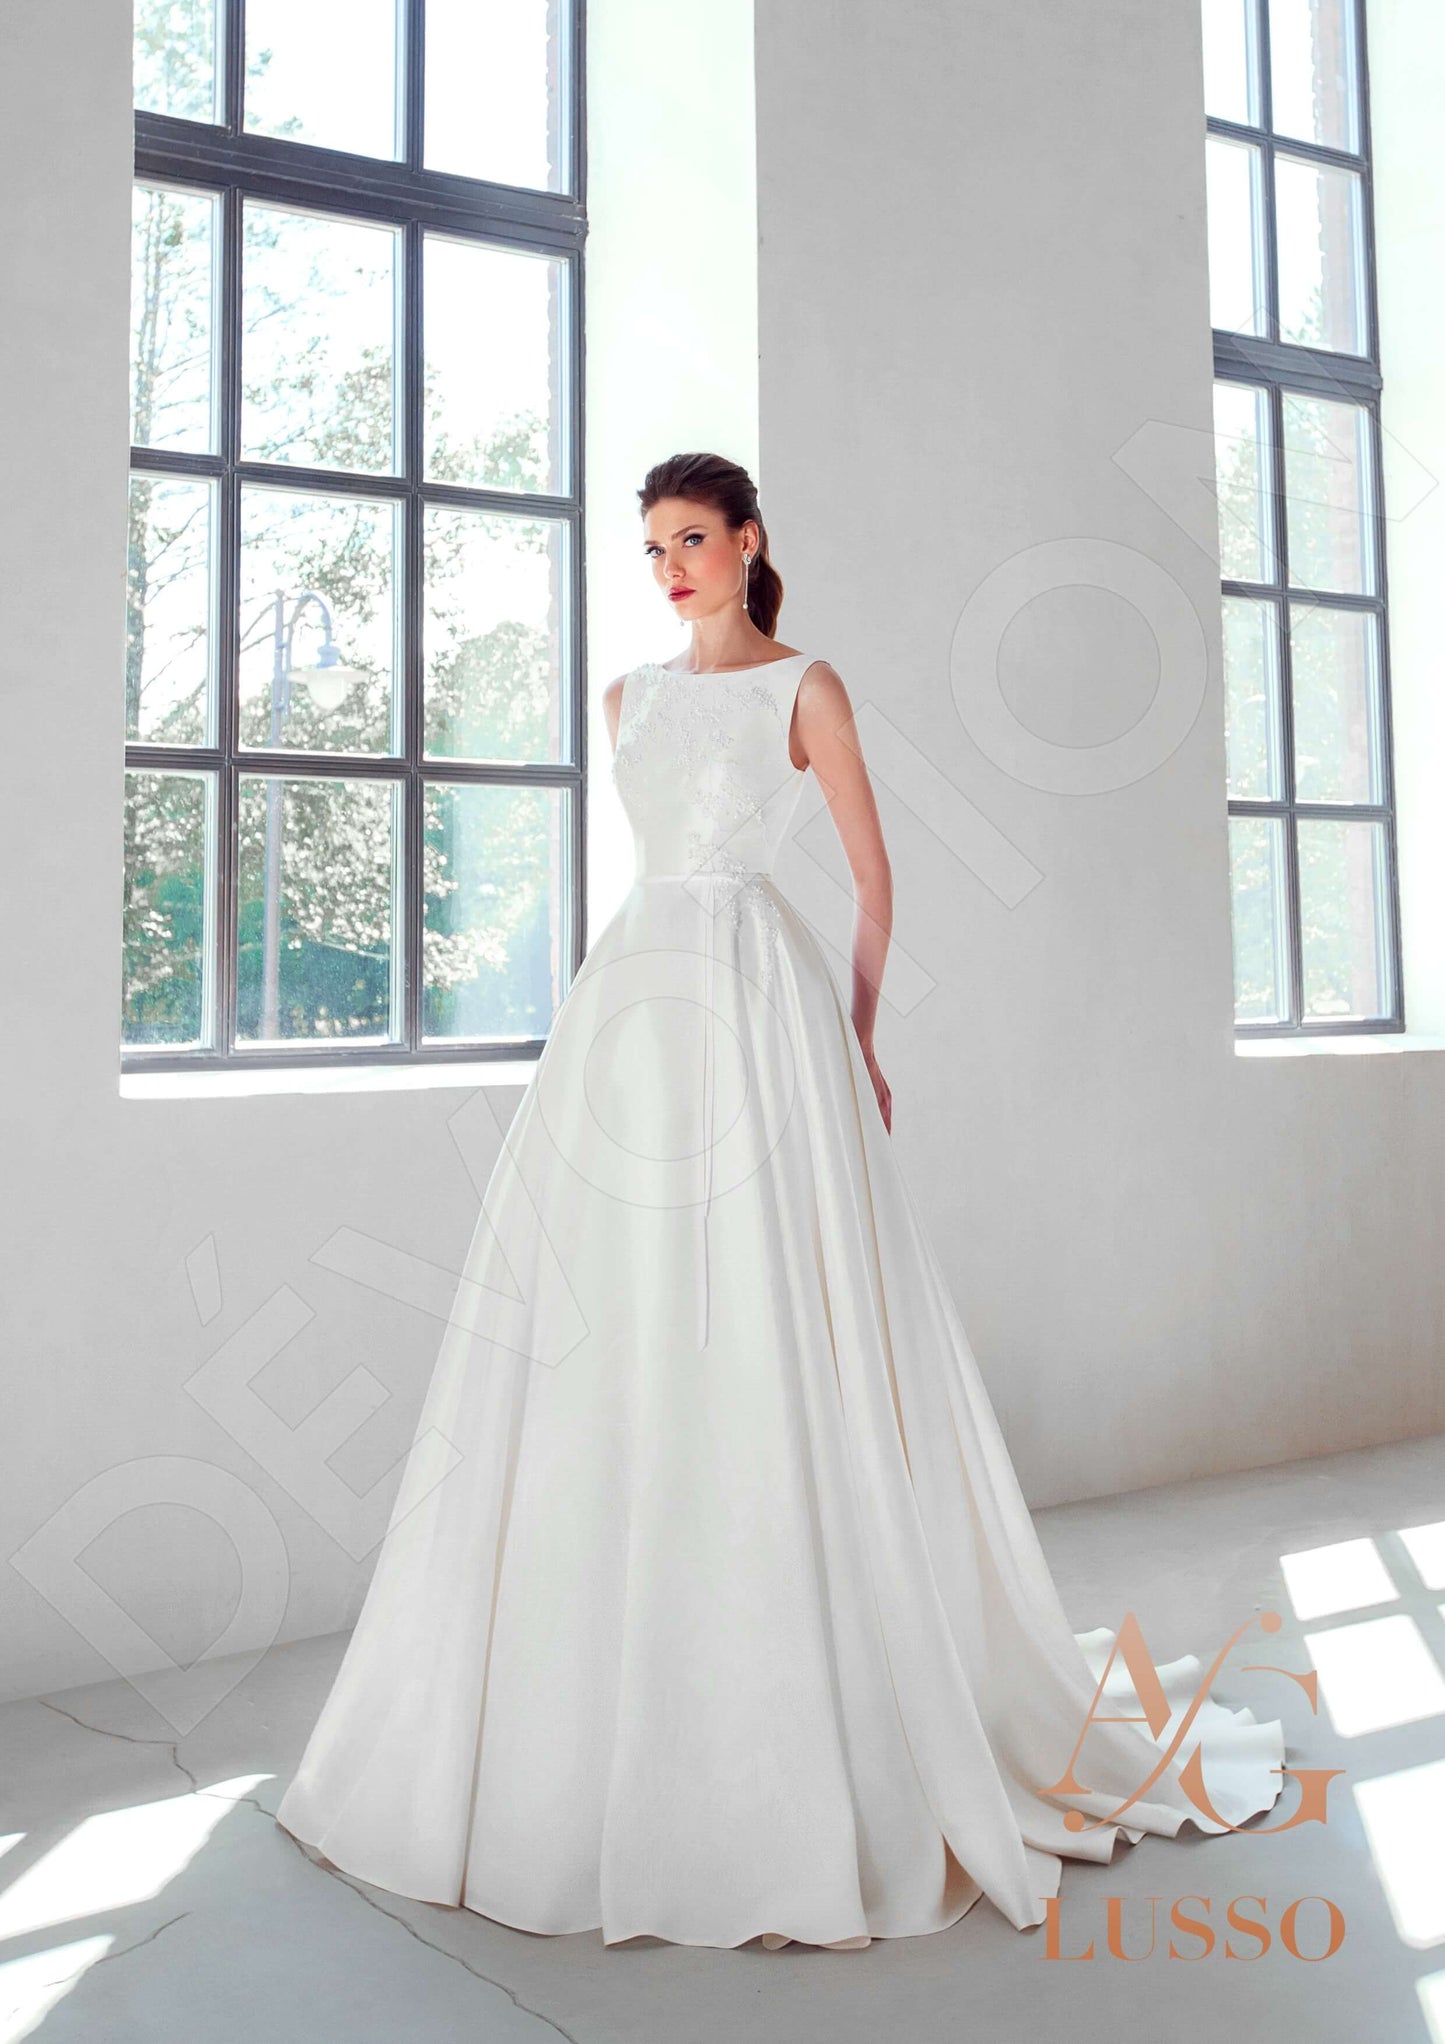 Hedonia Open back A-line Sleeveless Wedding Dress 6